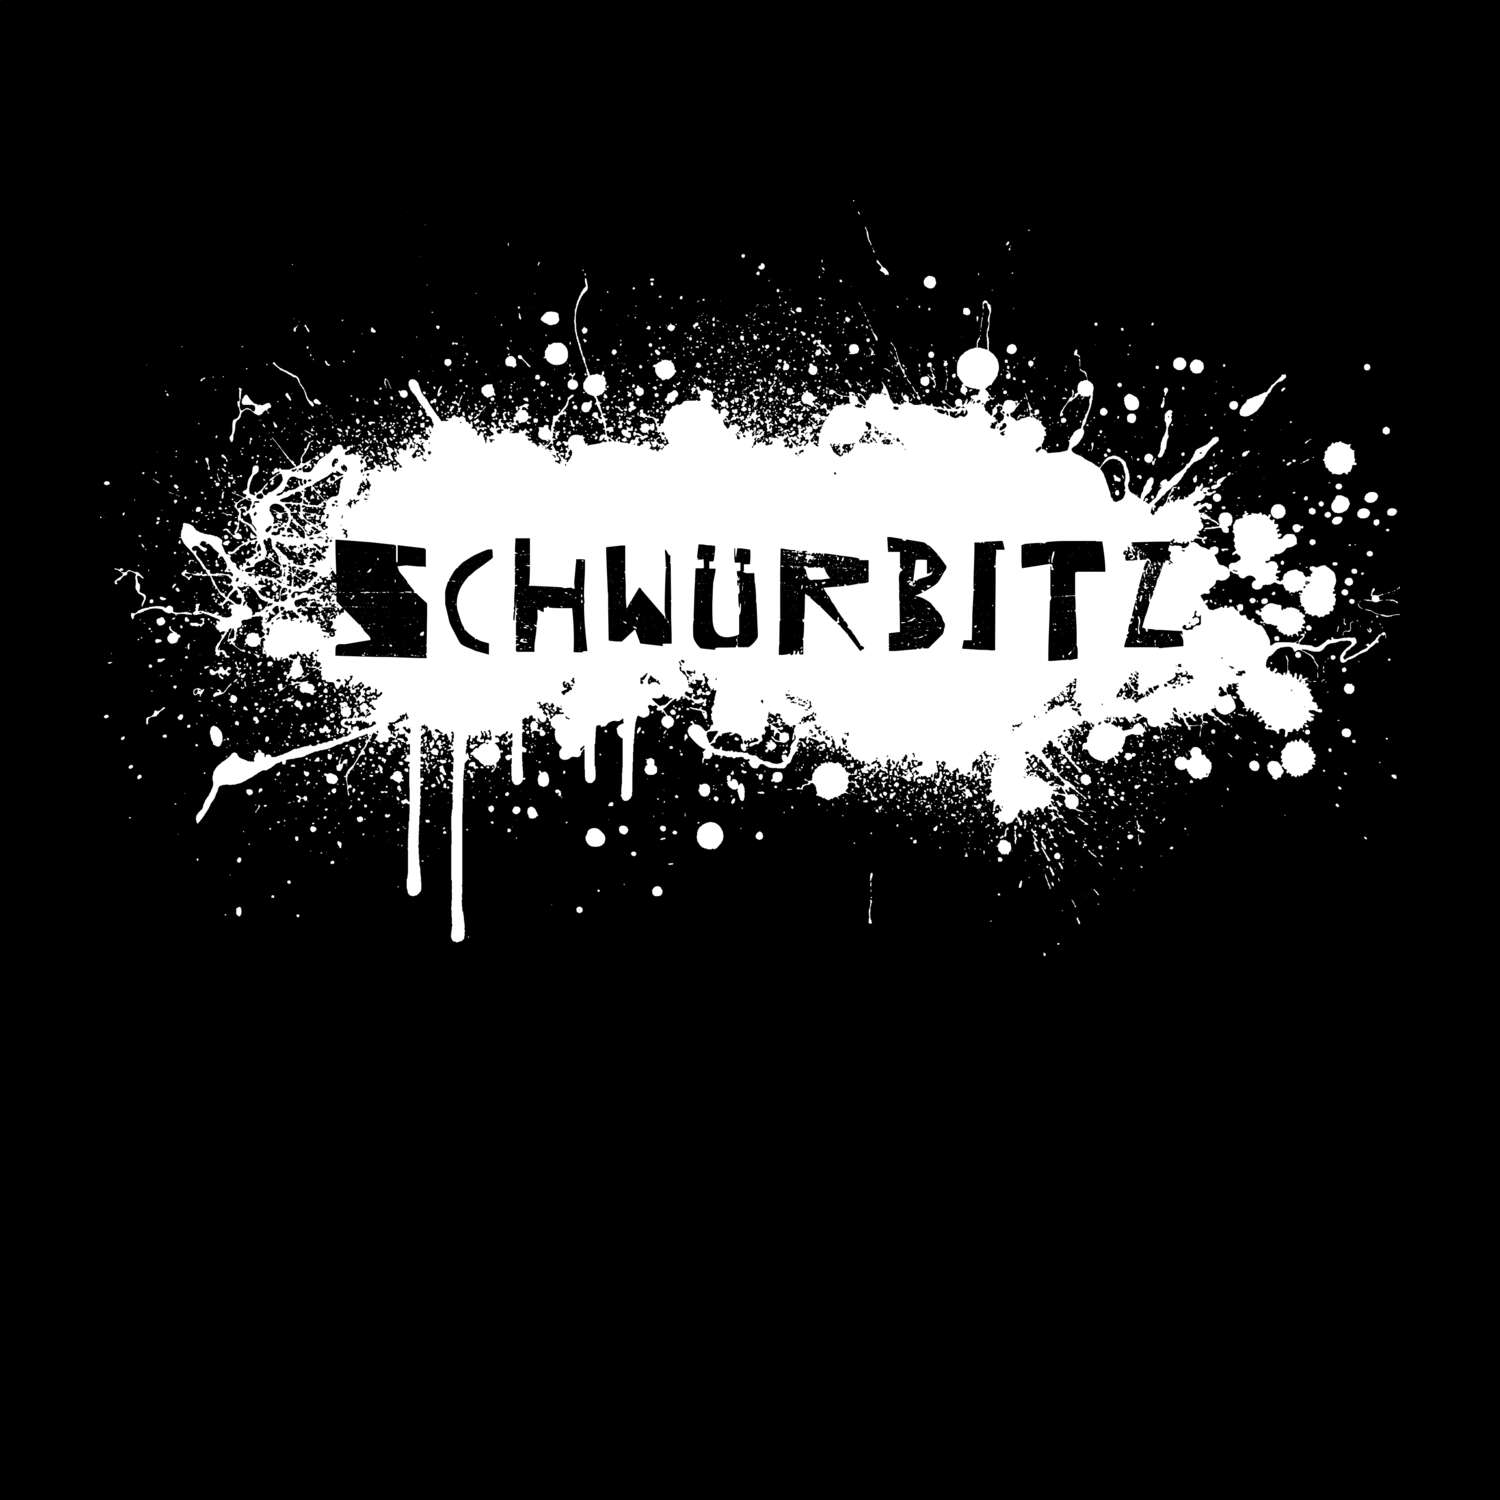 Schwürbitz T-Shirt »Paint Splash Punk«